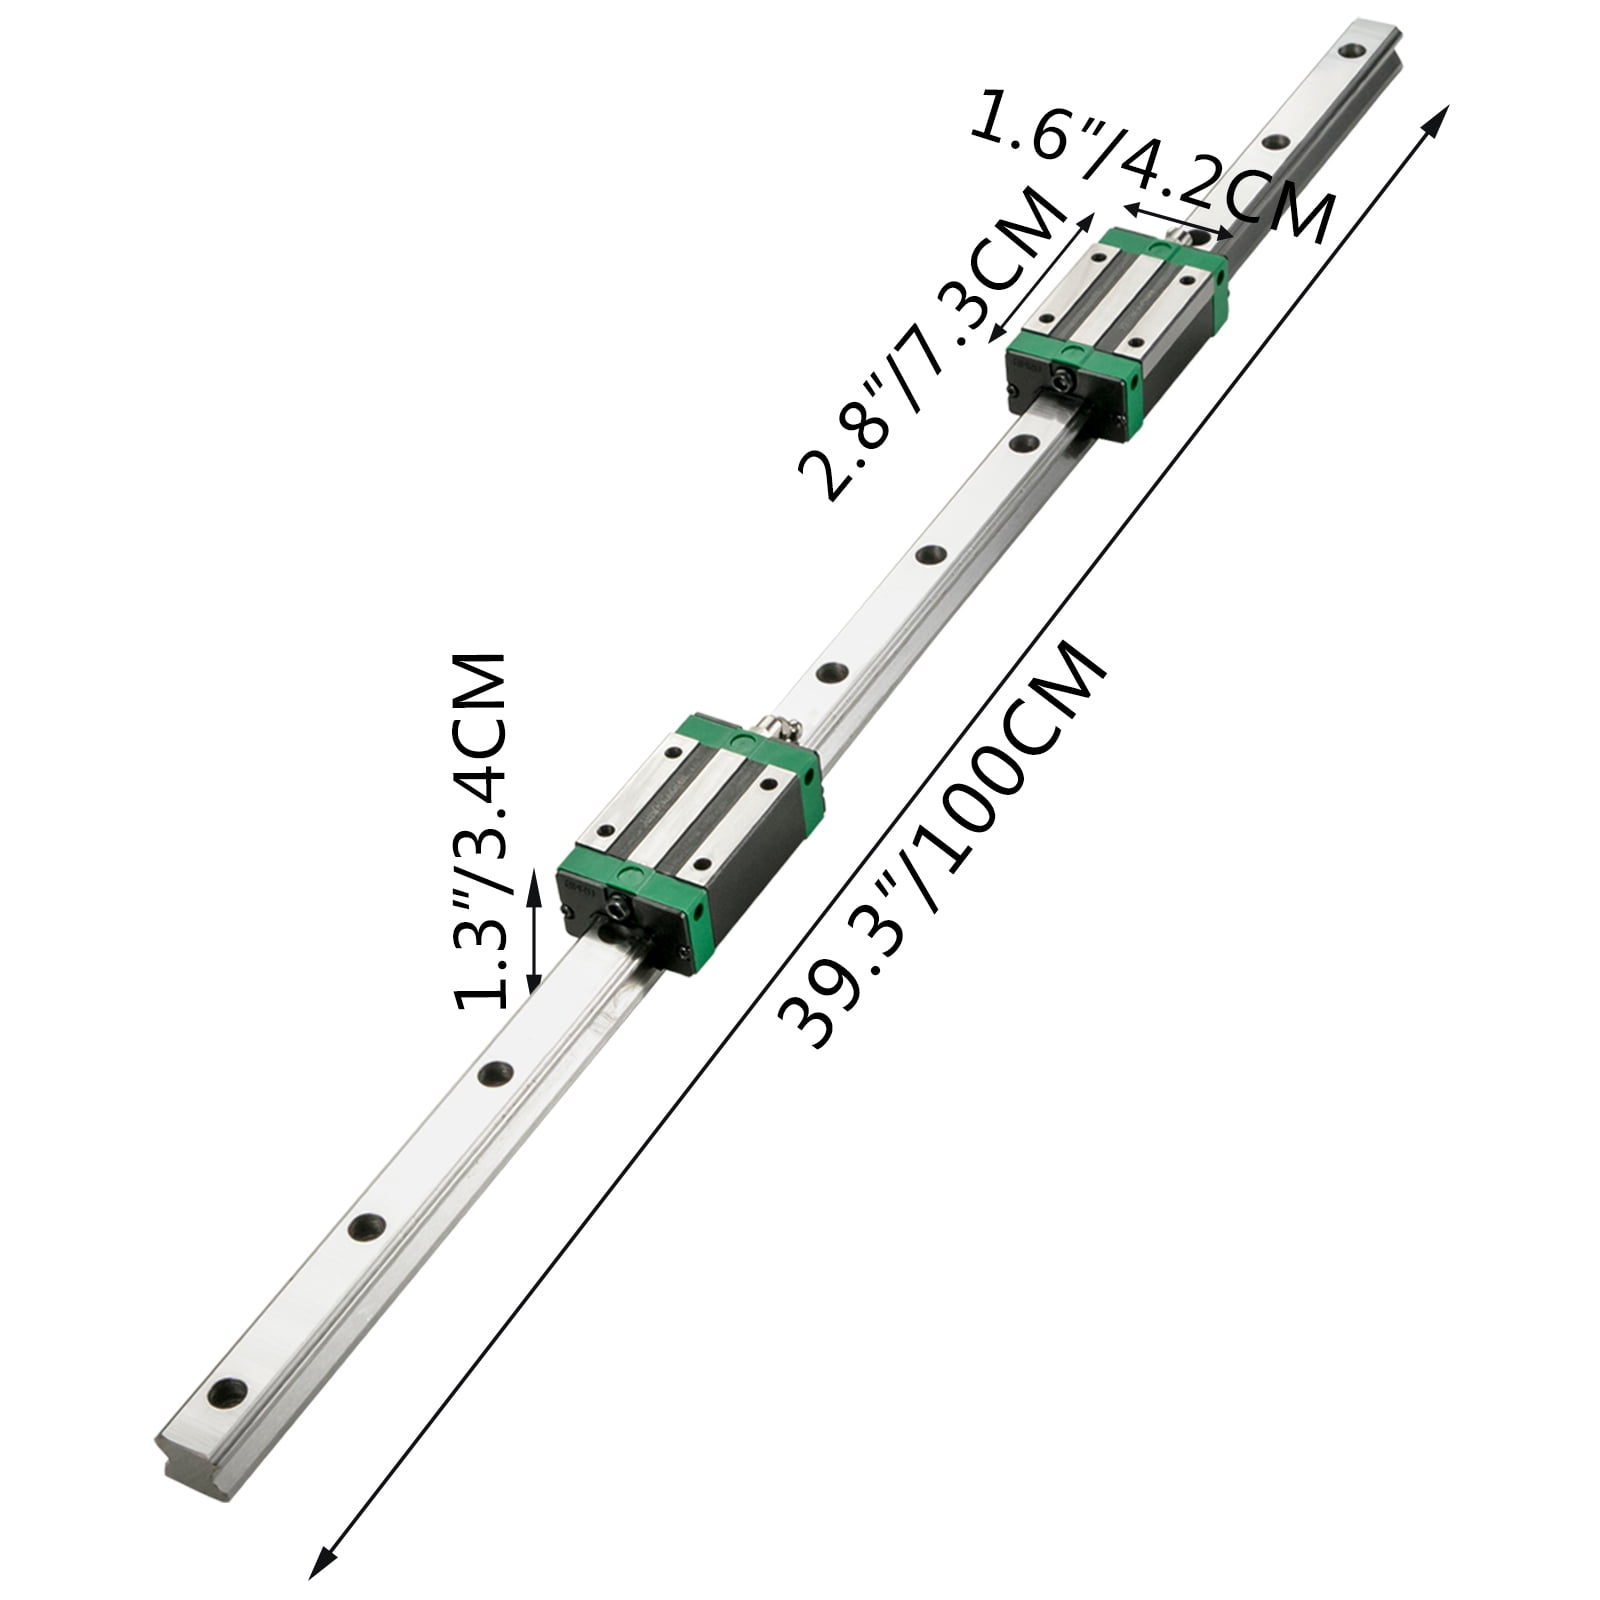 Yadianna Linear Guide Rail 2pcs HGR20-1000mm Linear Motion Rail with RM1605-1000mm Ballscrew and BF12/BK12 Kit